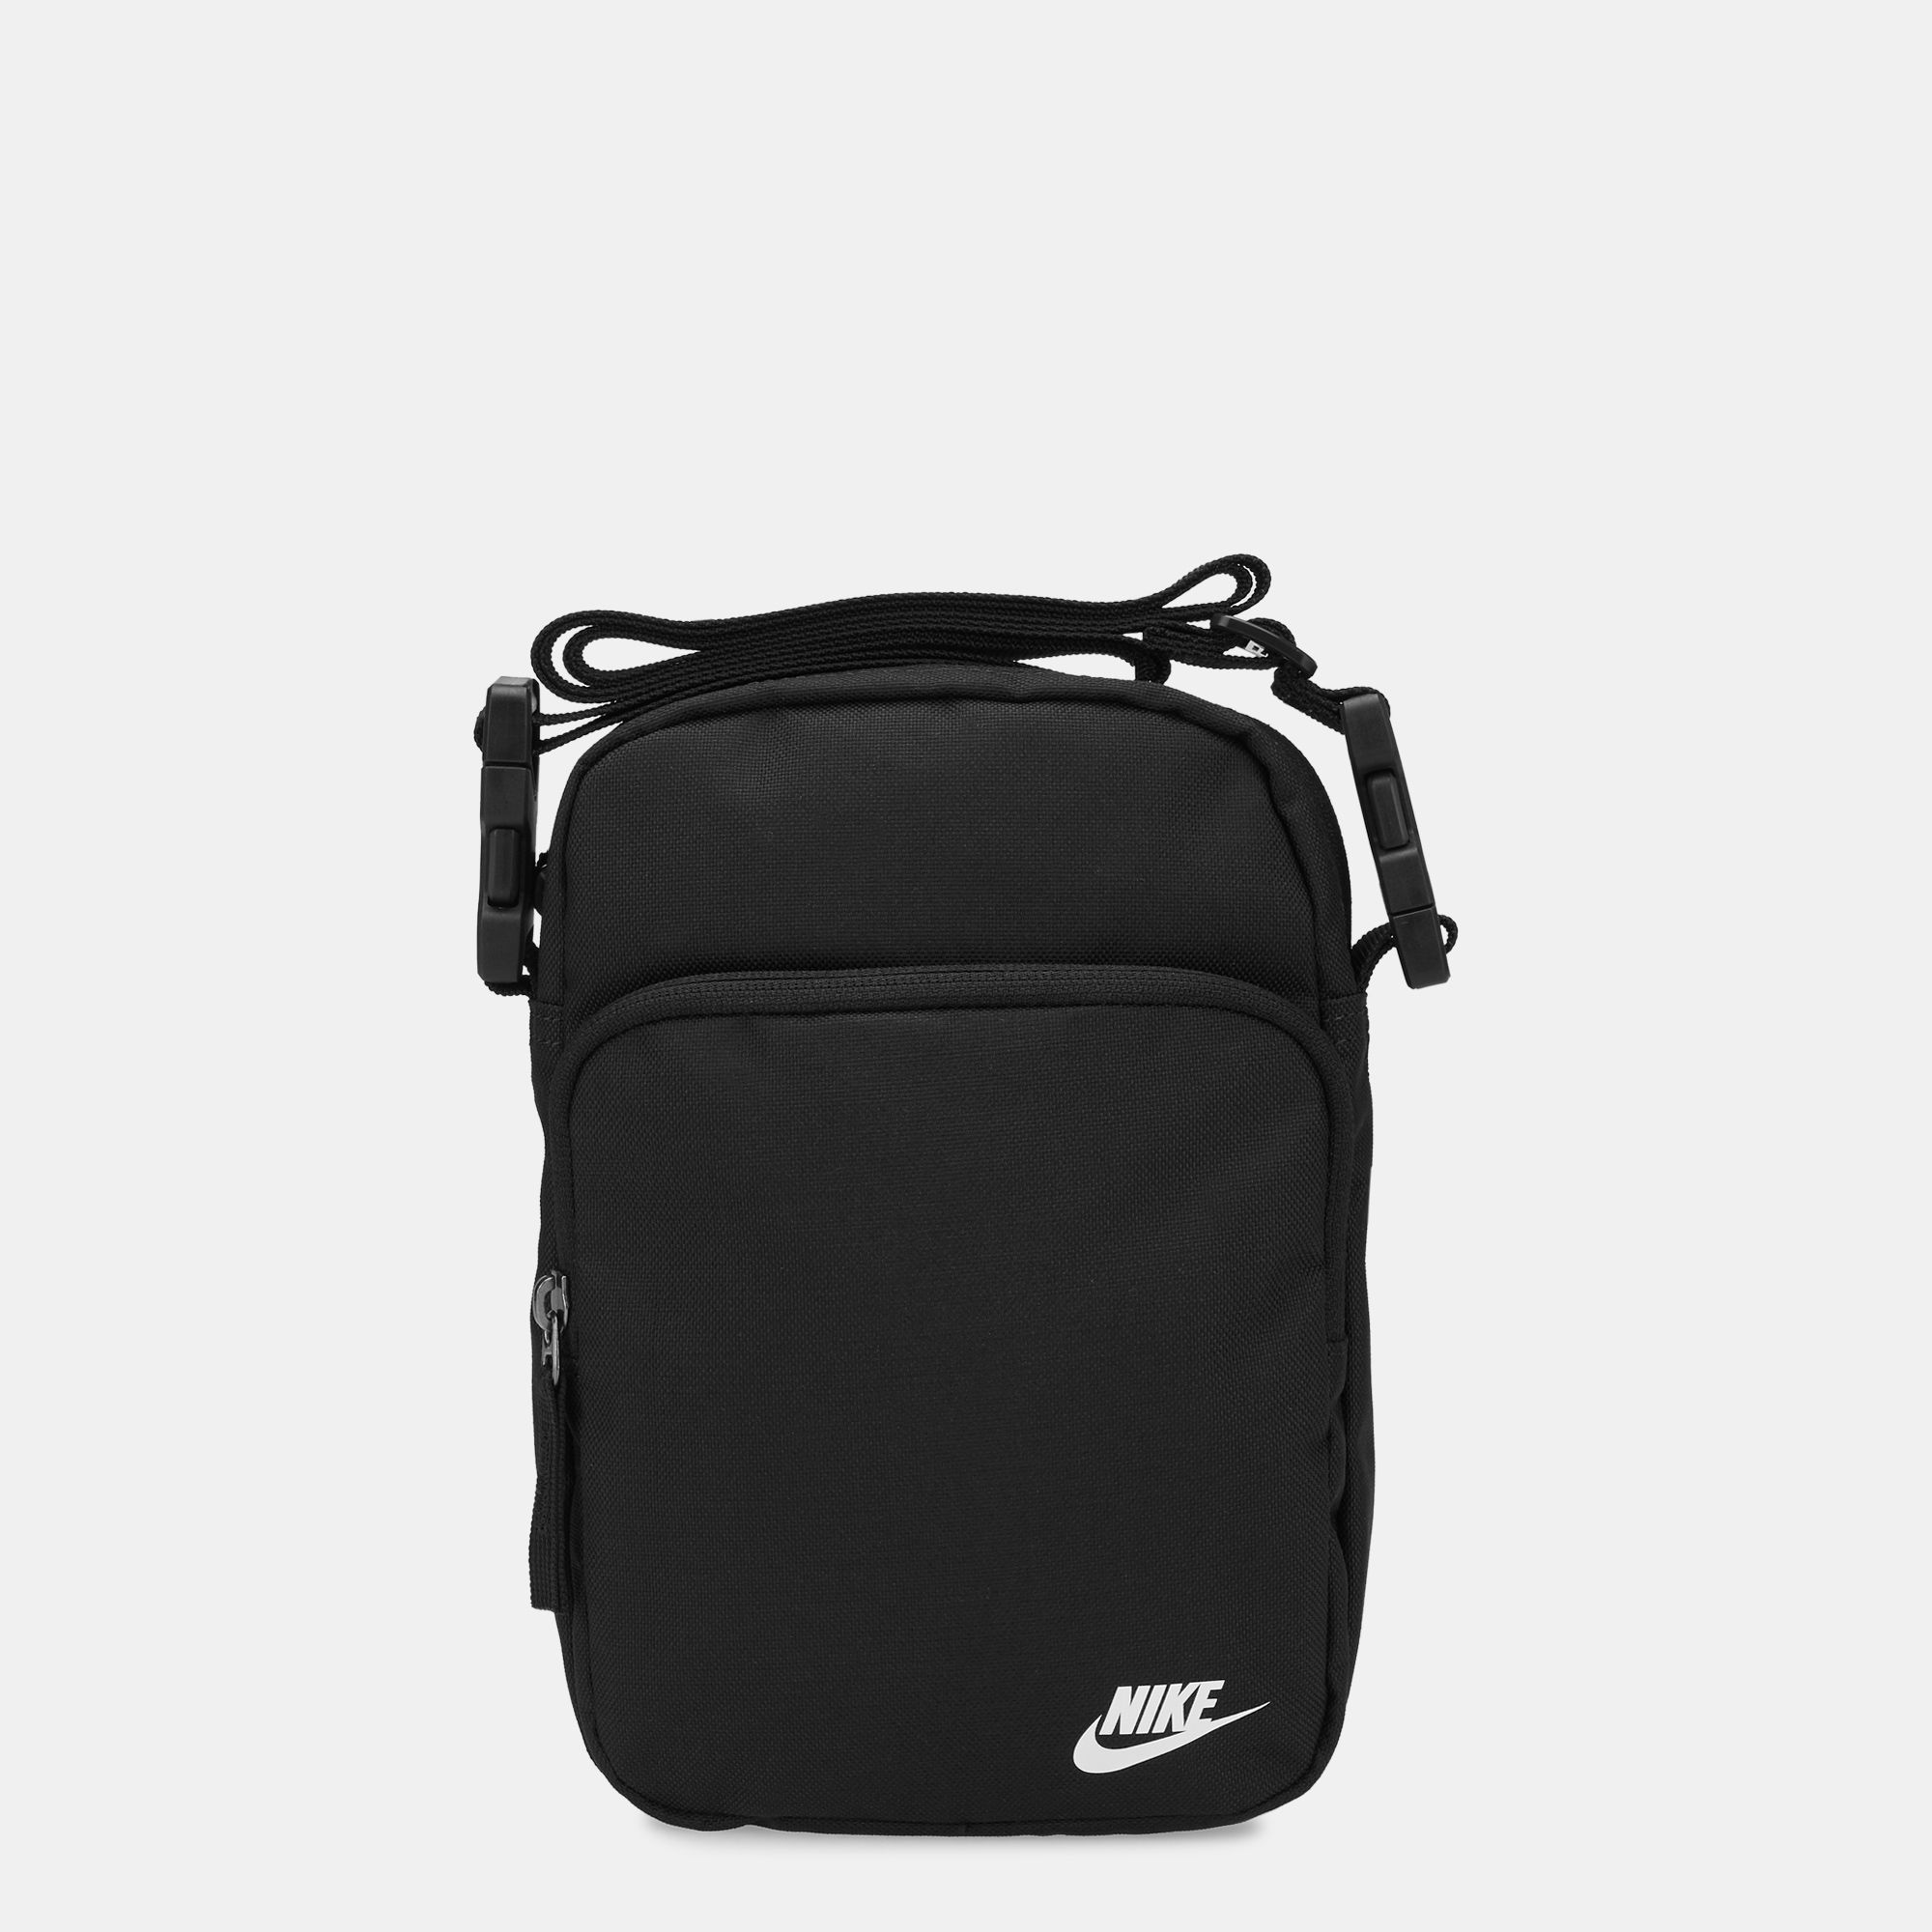 Nike Heritage 2.0 Crossbody Bag | Messenger Bags | Bags and Luggage ...